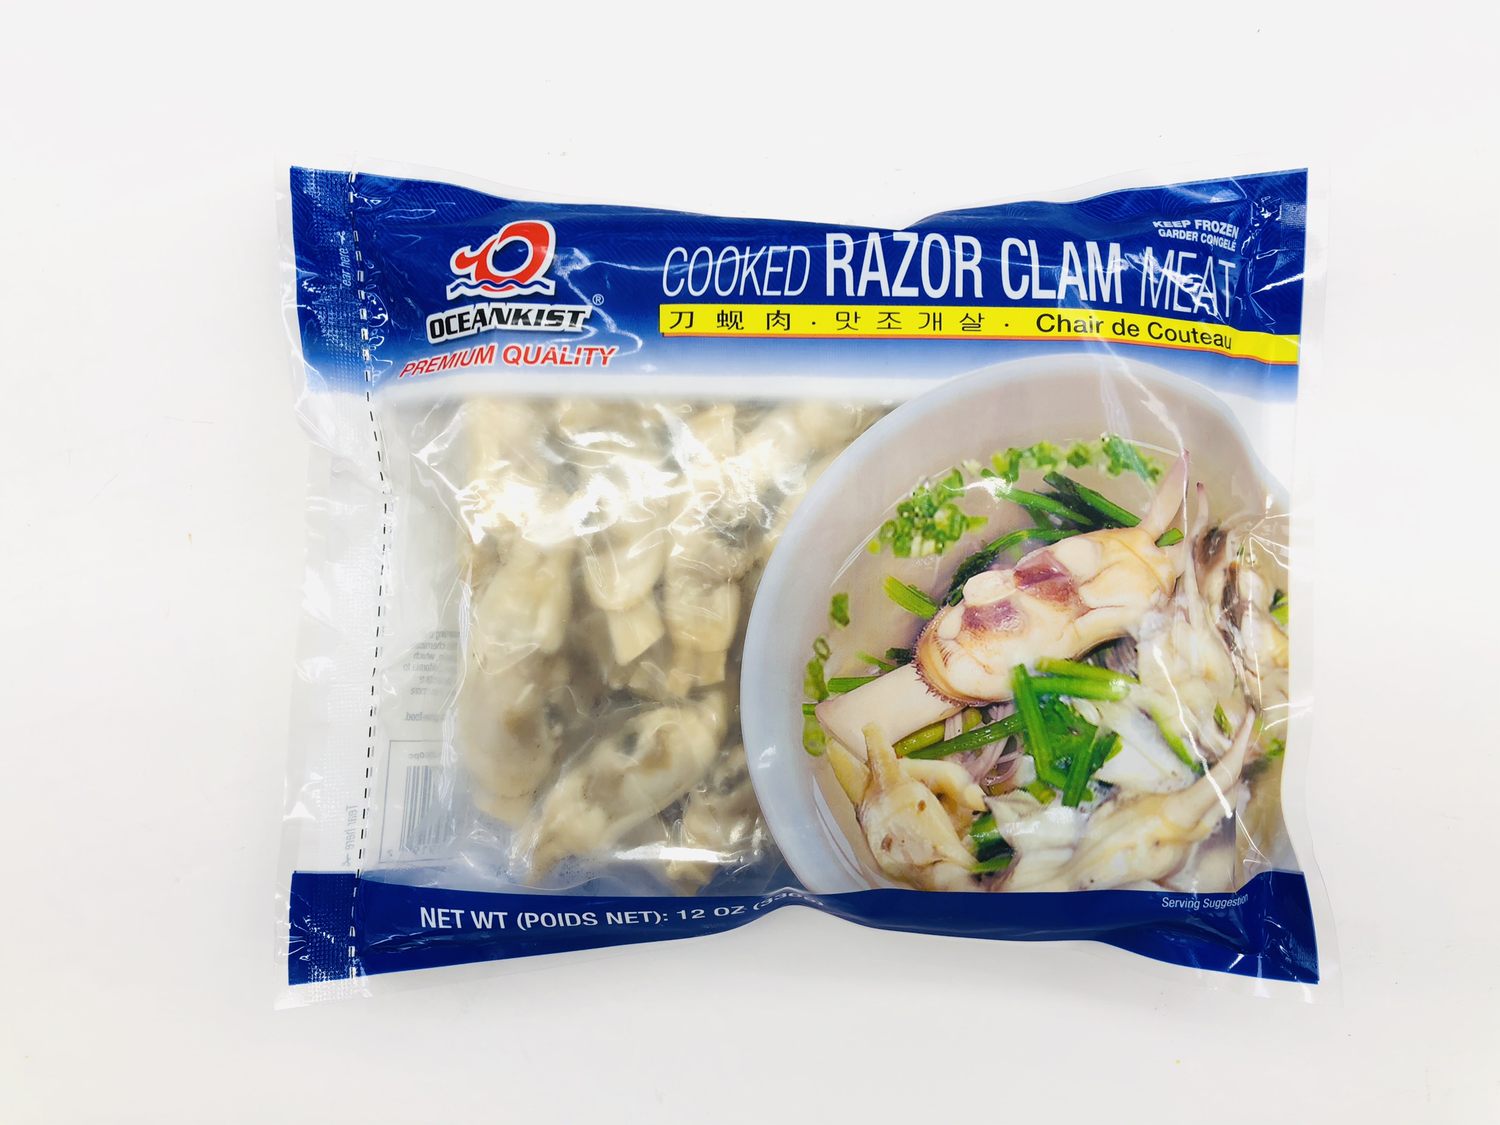 OCEANKIST 刀蚬肉 Cooked RAZOR CLAM MEAT 12OZ(336g)